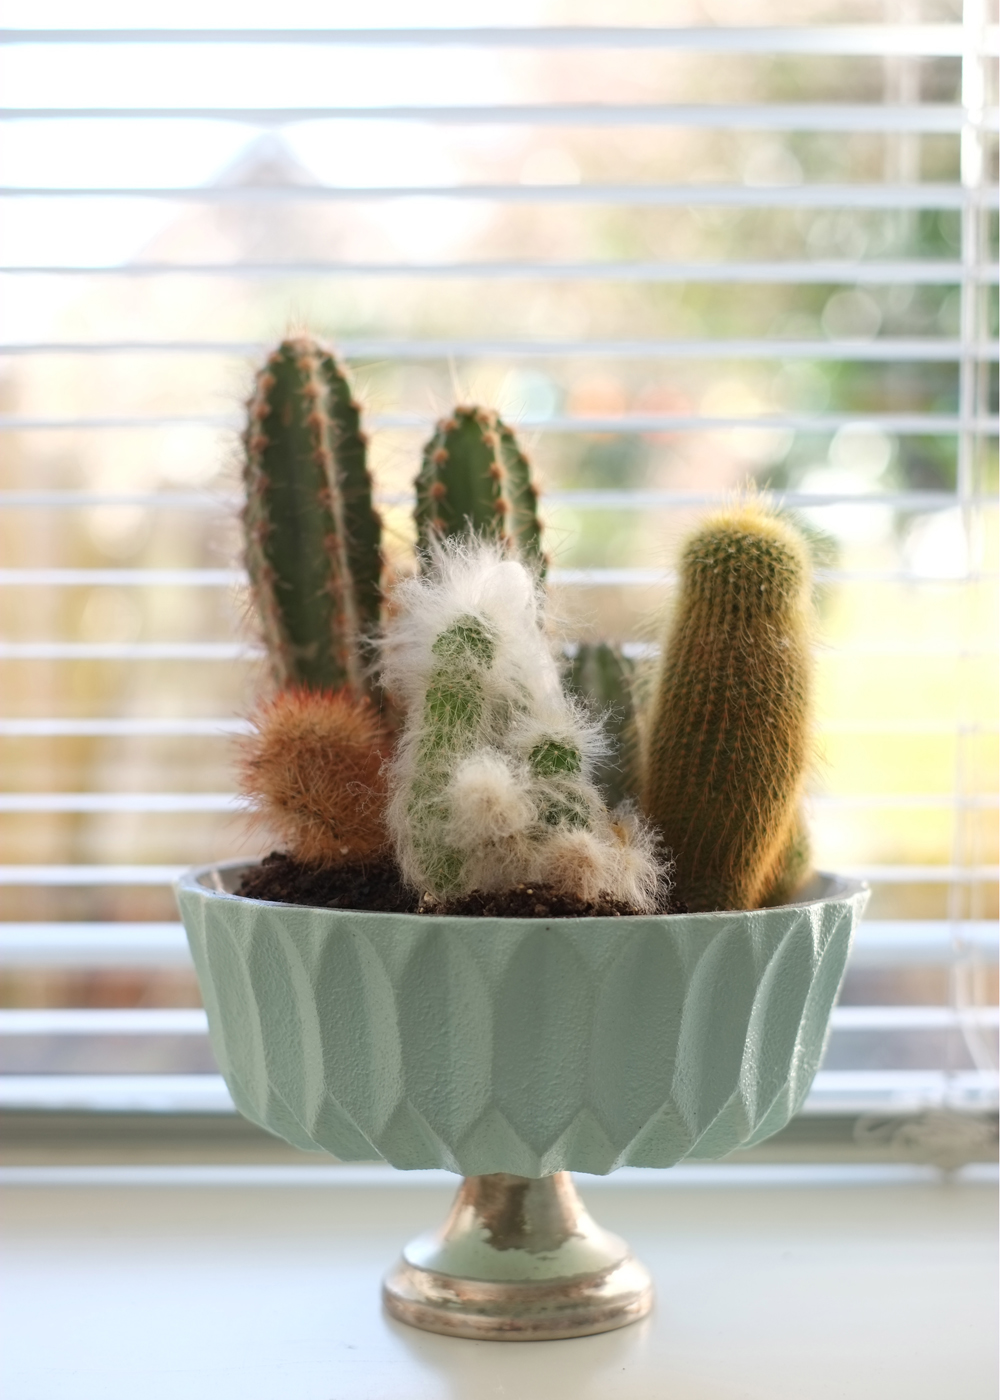 De cactus